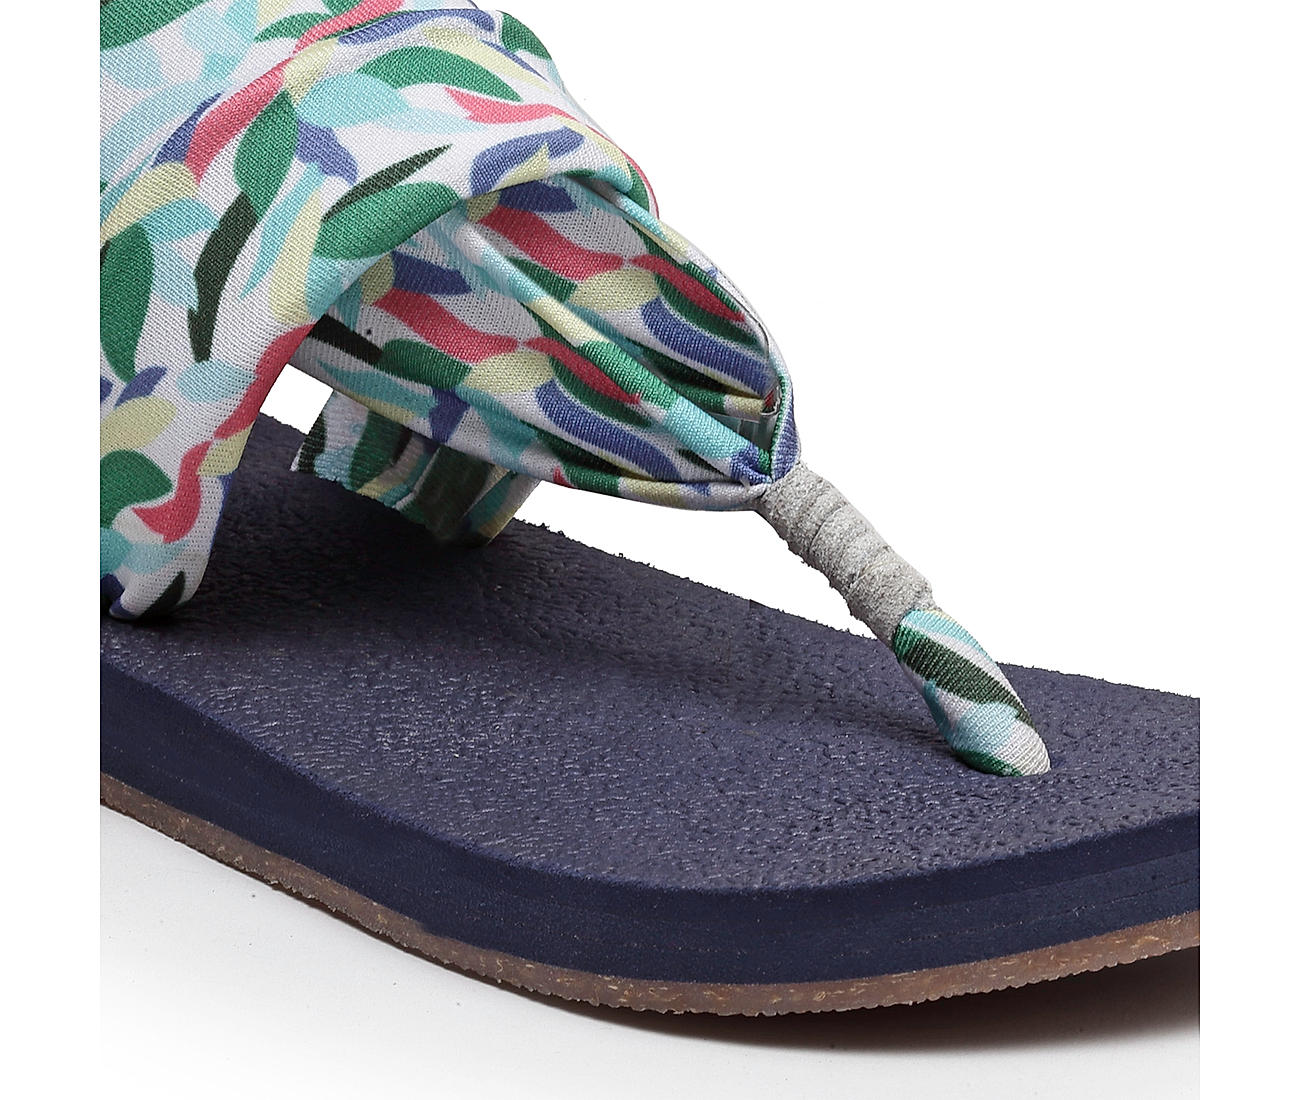 Sanuk Turquoise Tie Dye Yogamat Sling Sandal Shoes Womens 7